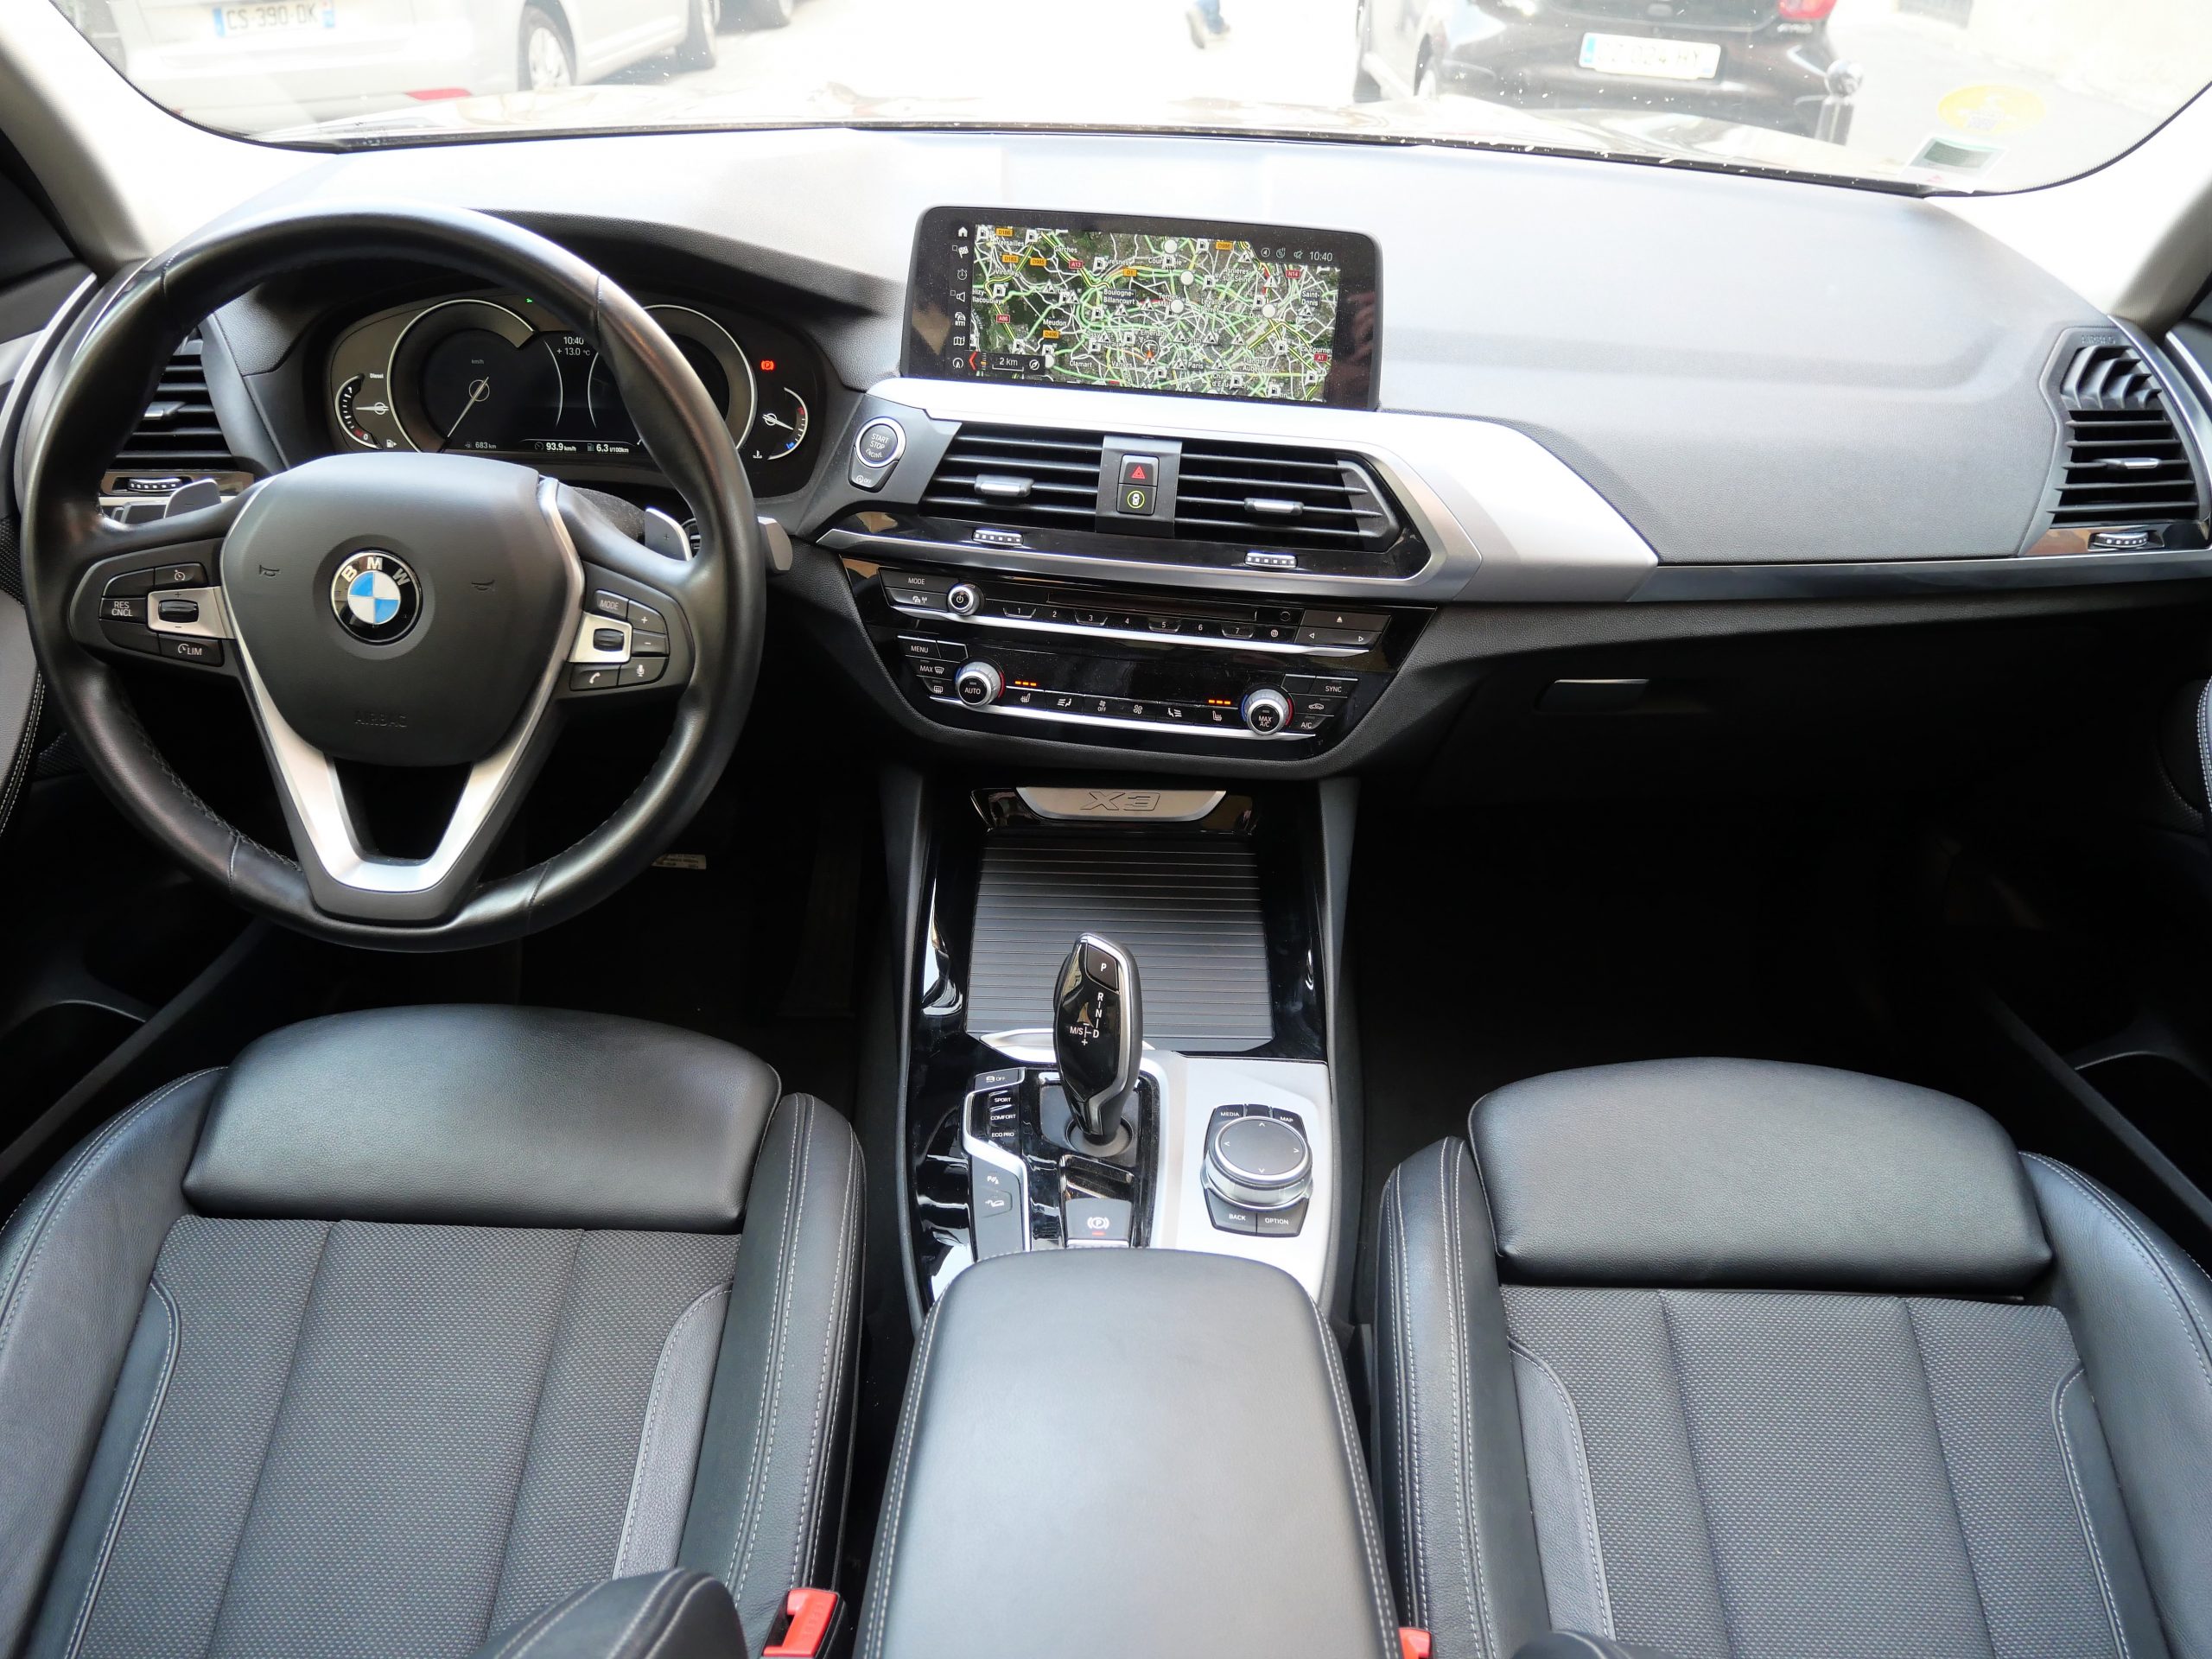 BMW X3 Xline (G01) 20d xDrive 2.0 d Steptronic8 190 ch 12